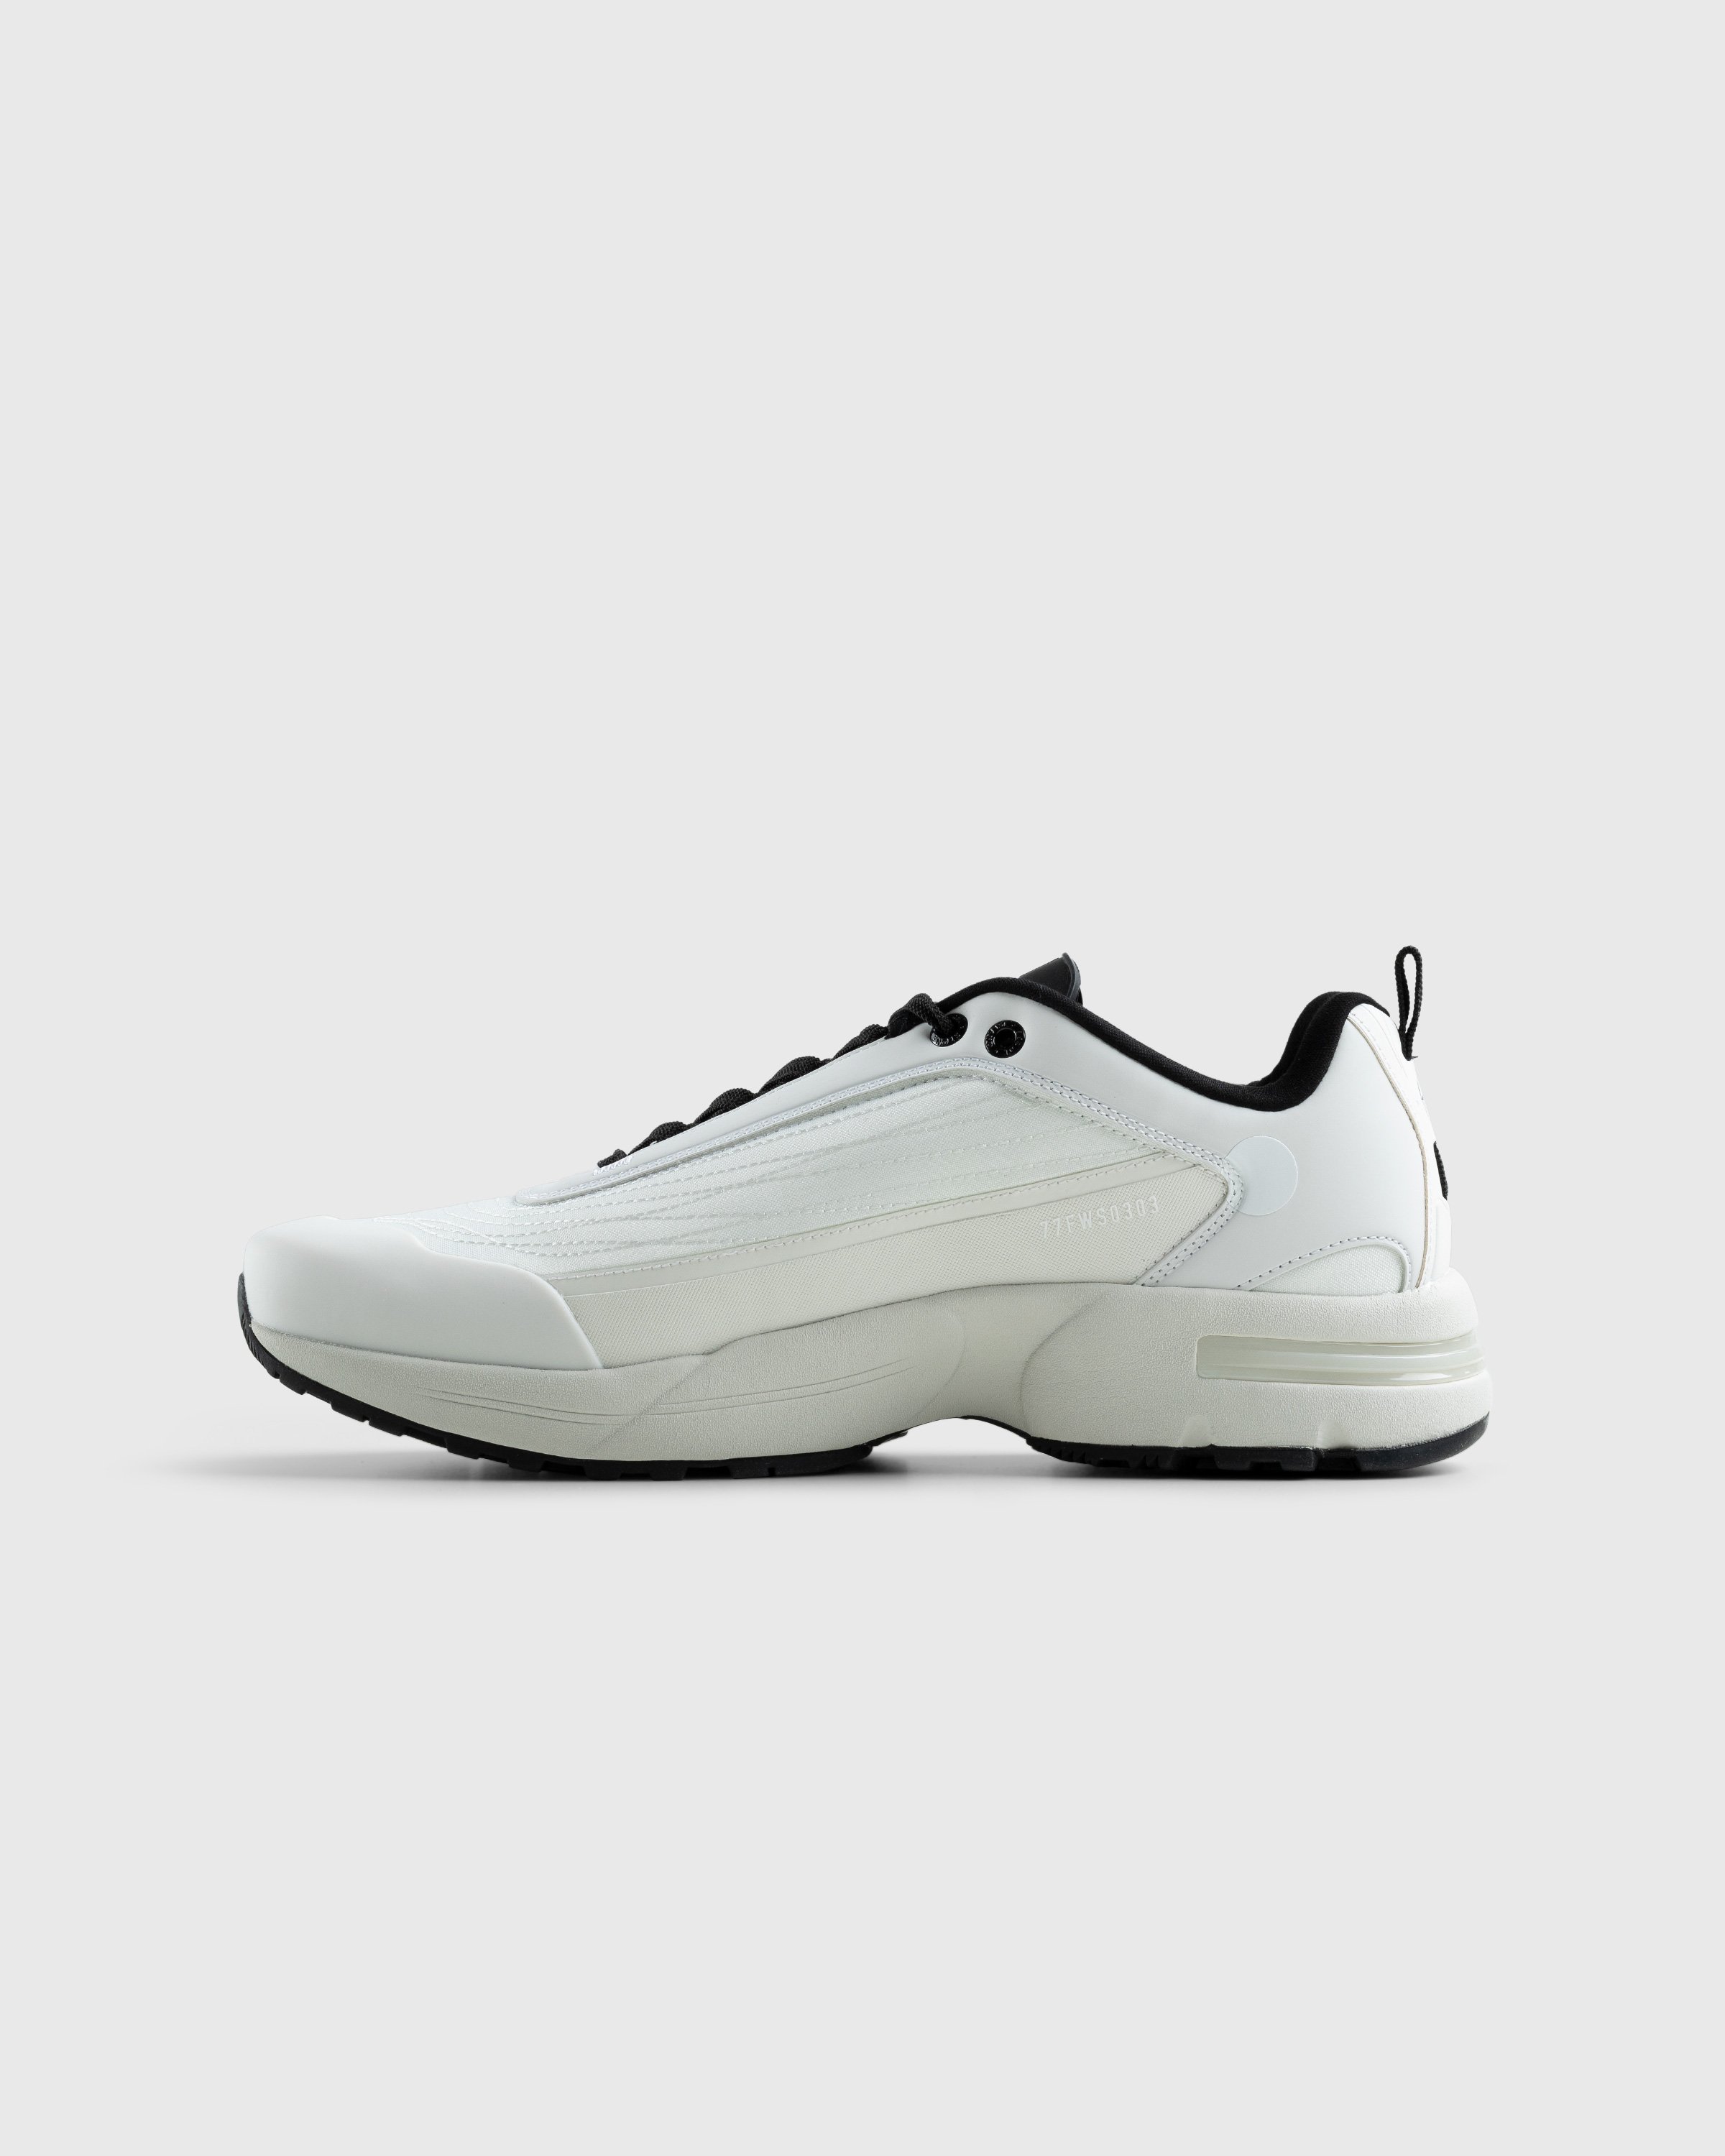 Stone Island - Grime Sneaker White - Footwear - White - Image 2